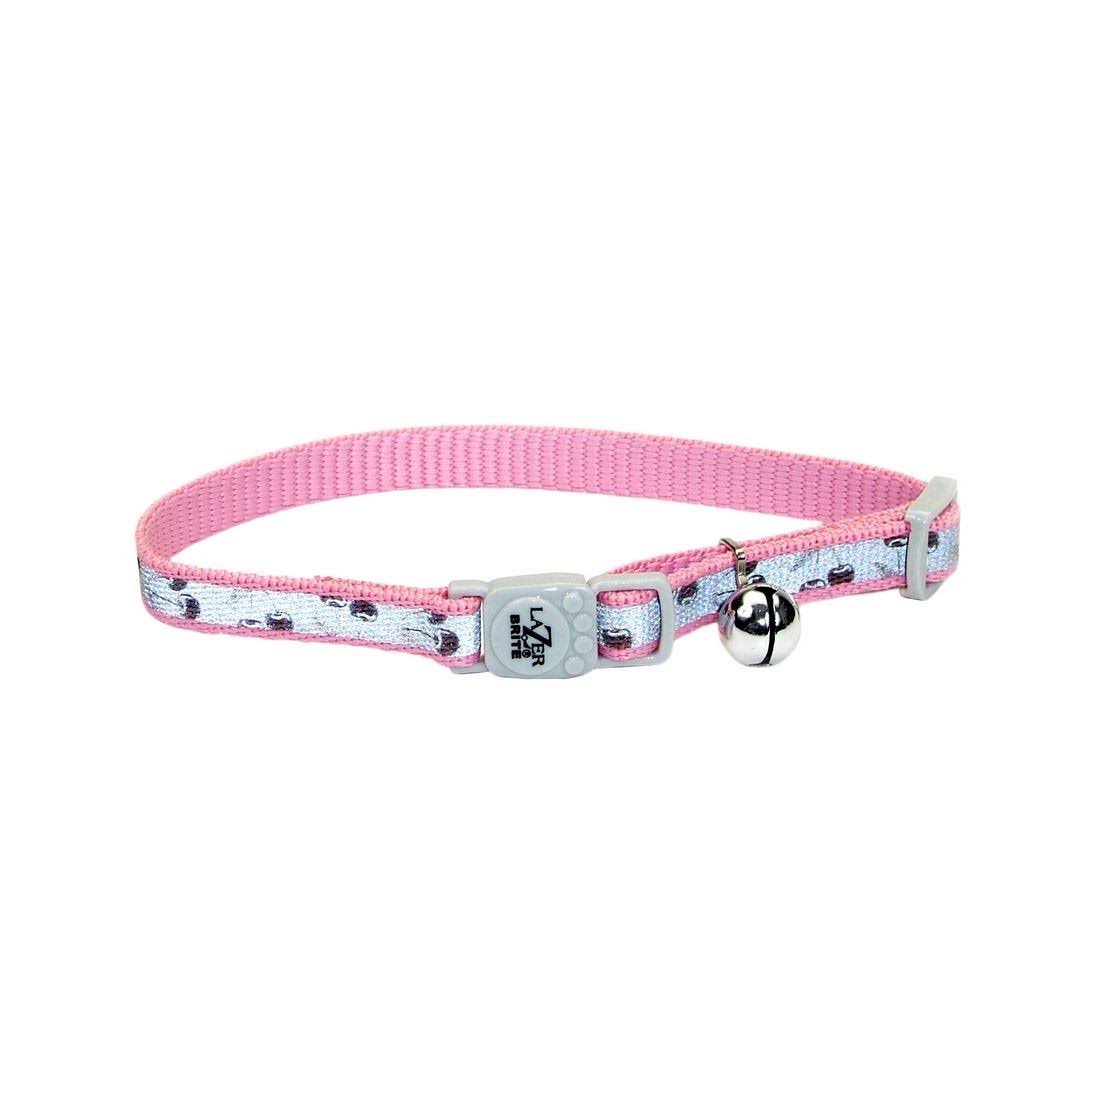 Coastal Pet Products Lazer Brite Reflective Adjustable Breakaway Cat Collar - Pink Cherry